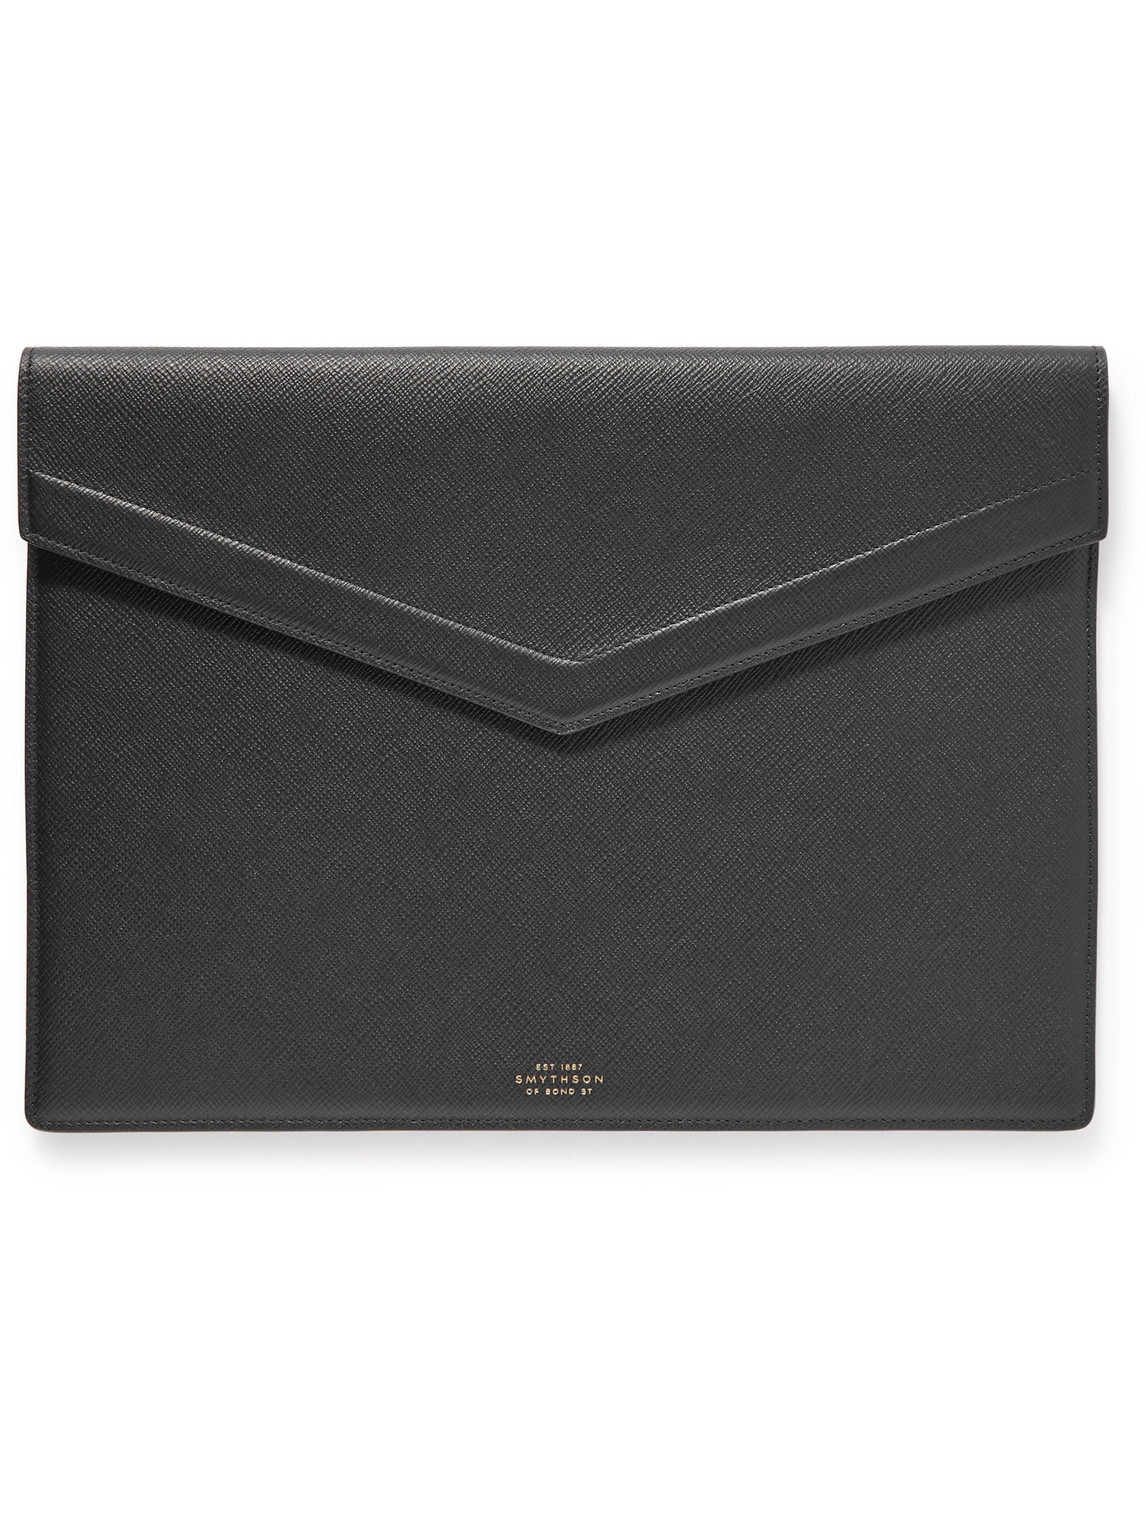 Smythson Panama Cross-grain Leather Envelope Folio In Black